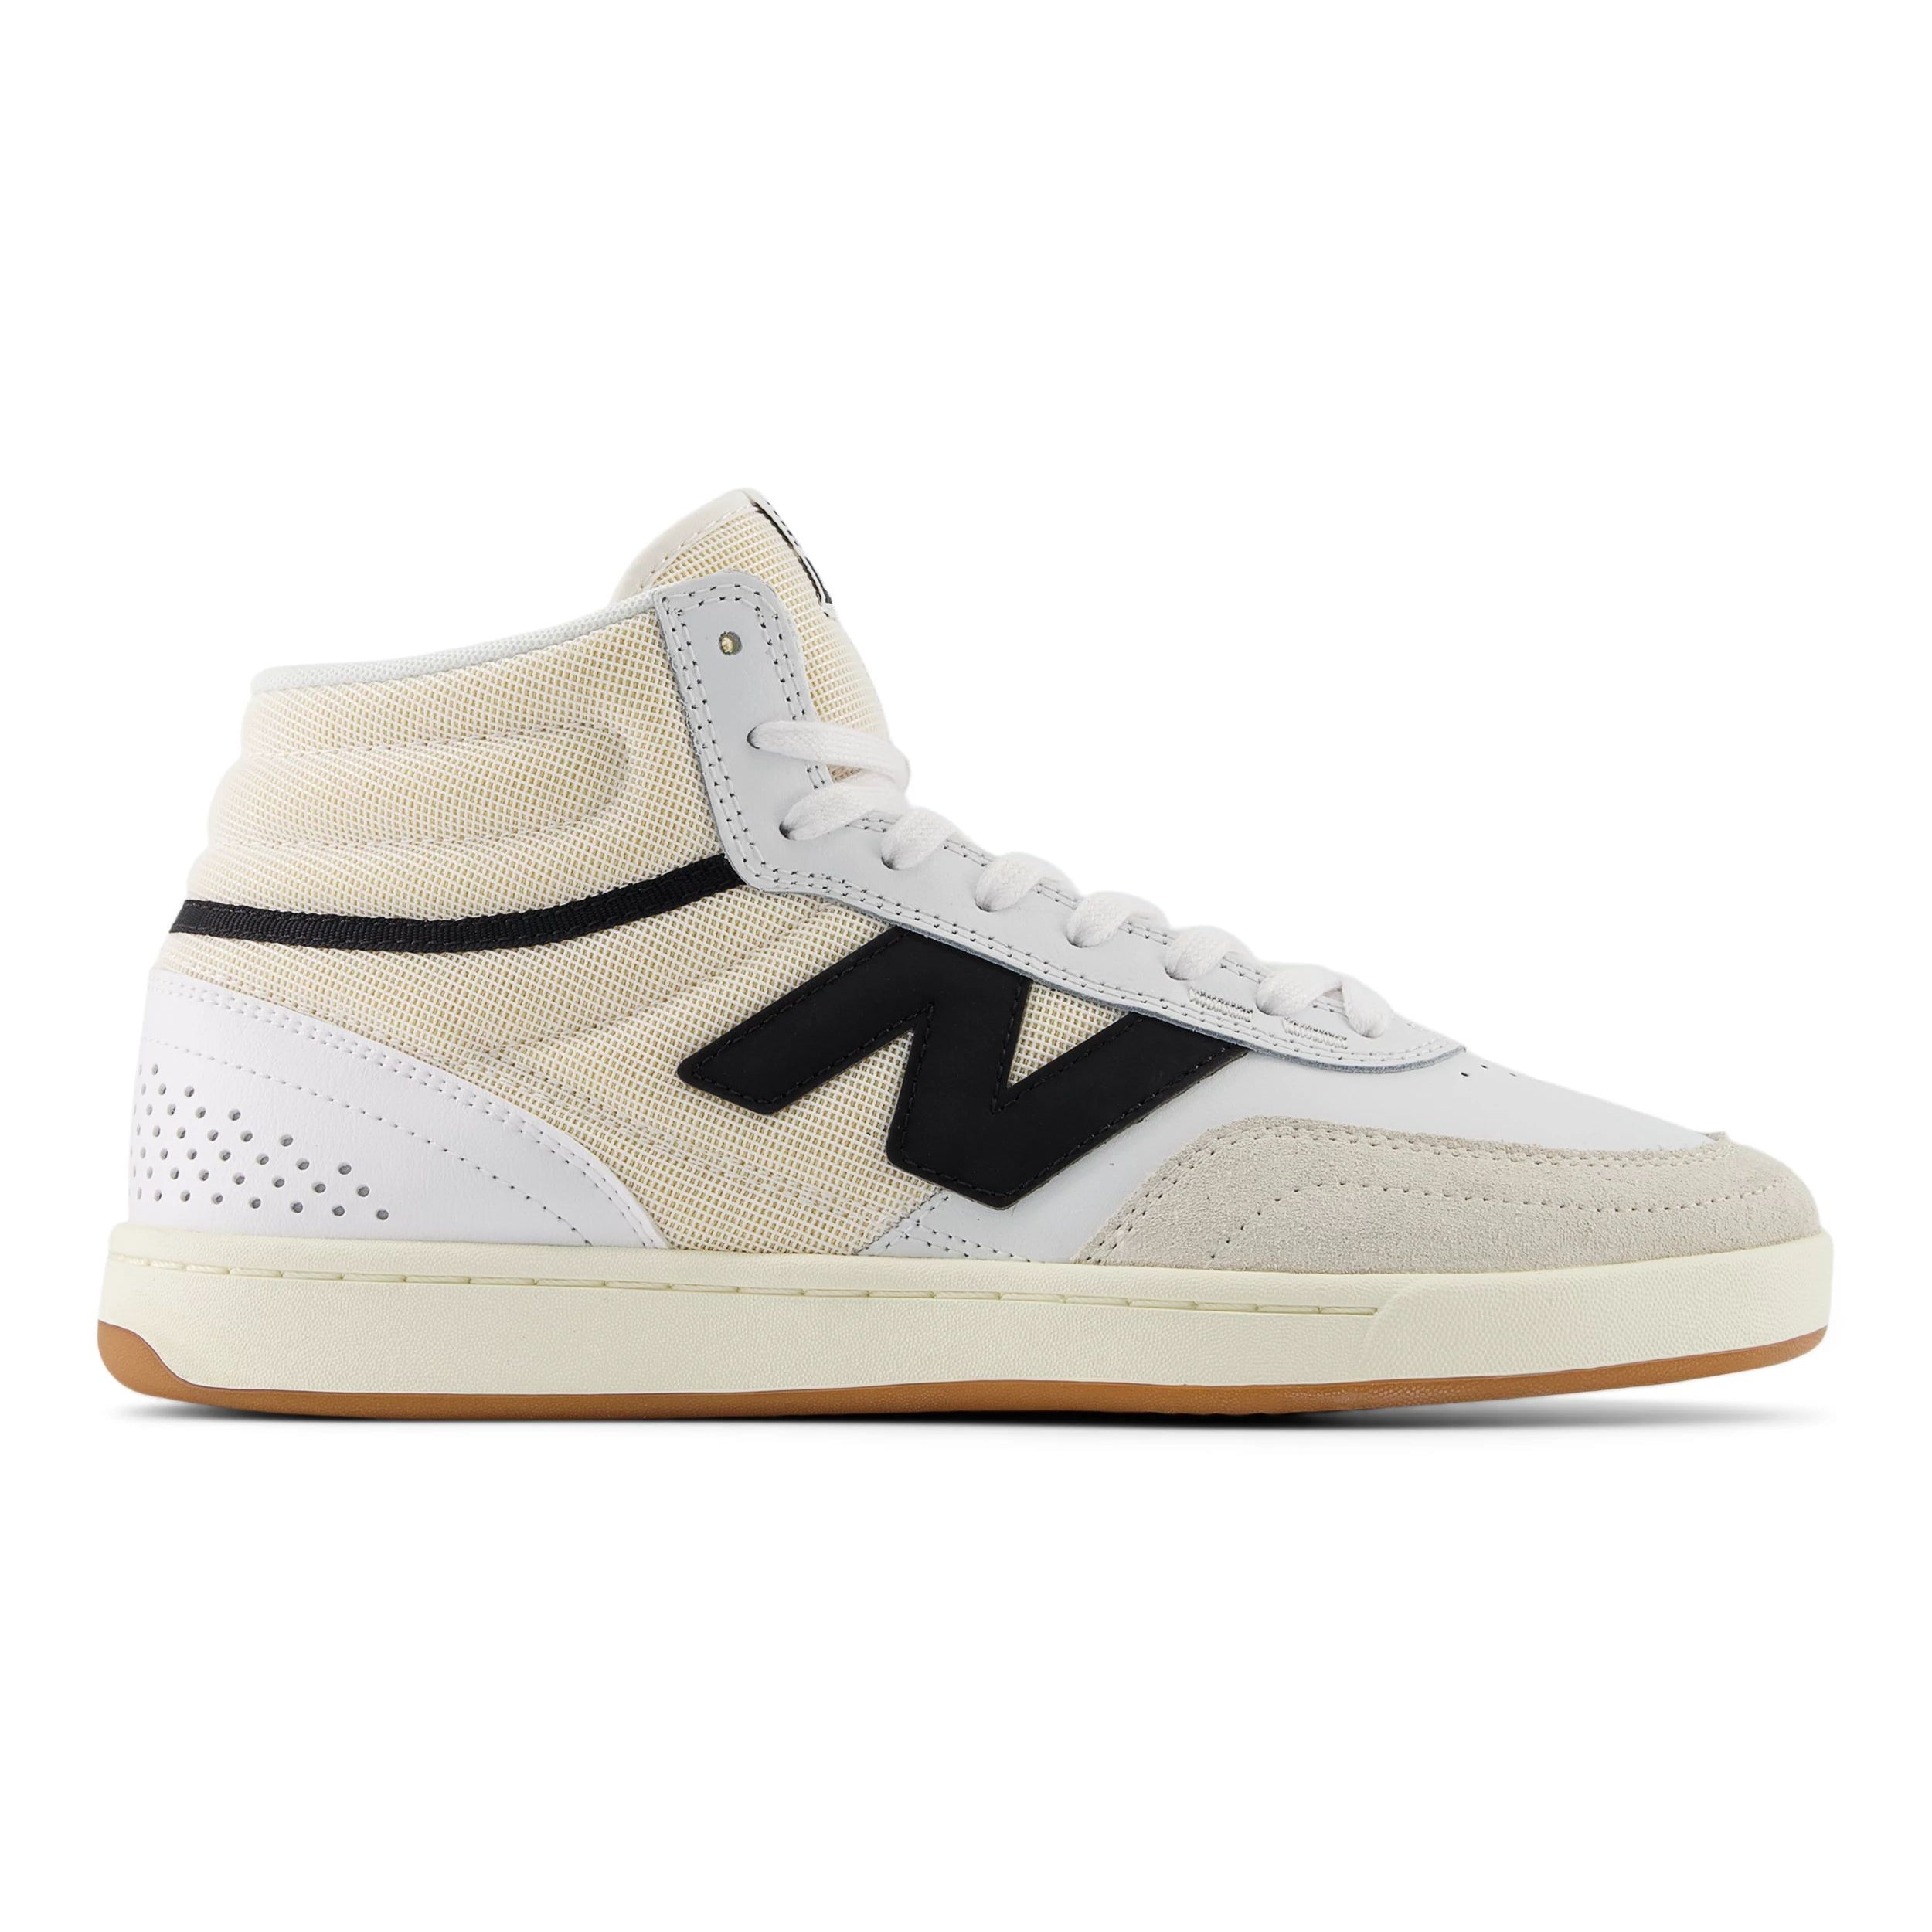 White/Black NM440v2 High NB Numeric Skate Shoe